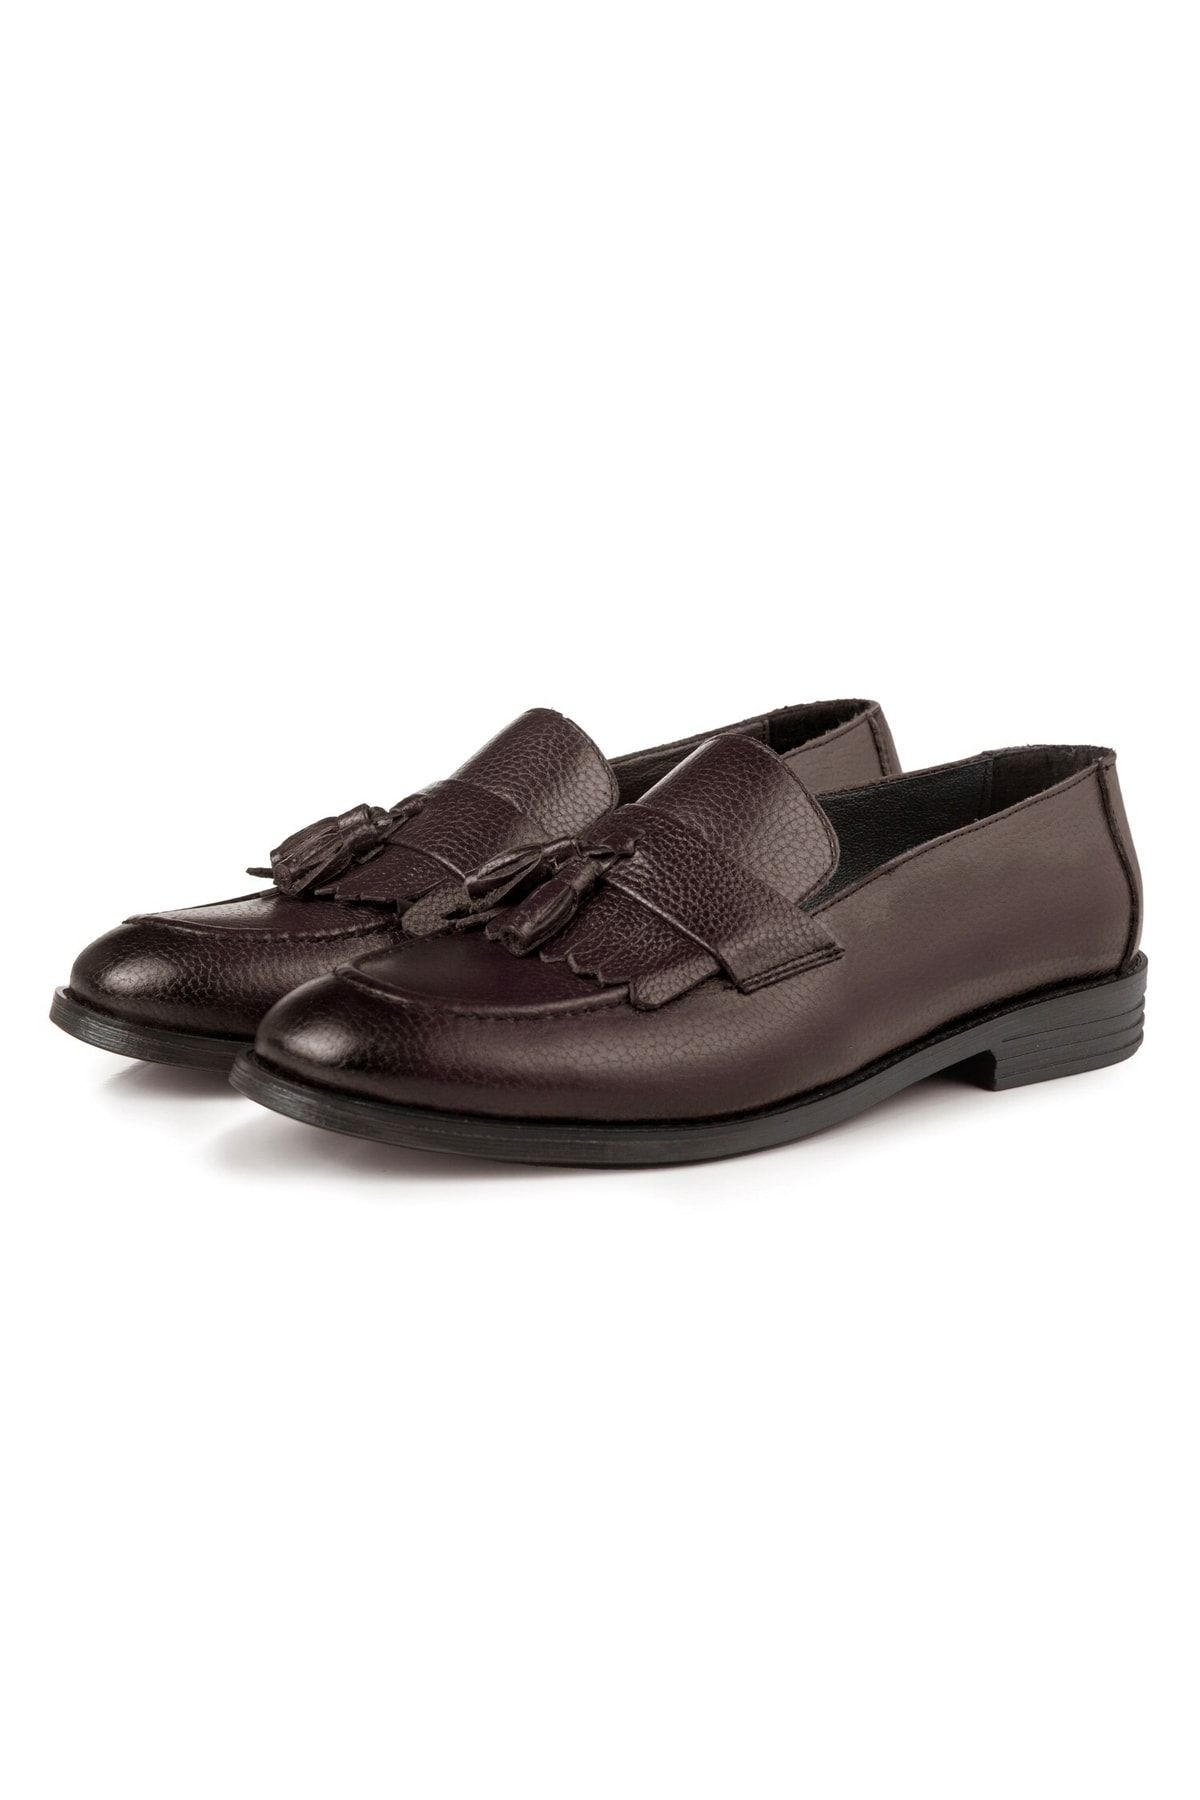 Ducavelli Tassel Hakiki Deri Erkek Klasik Ayakkabı, Loafer Klasik Ayakkabı, Makosen Ayakkabı